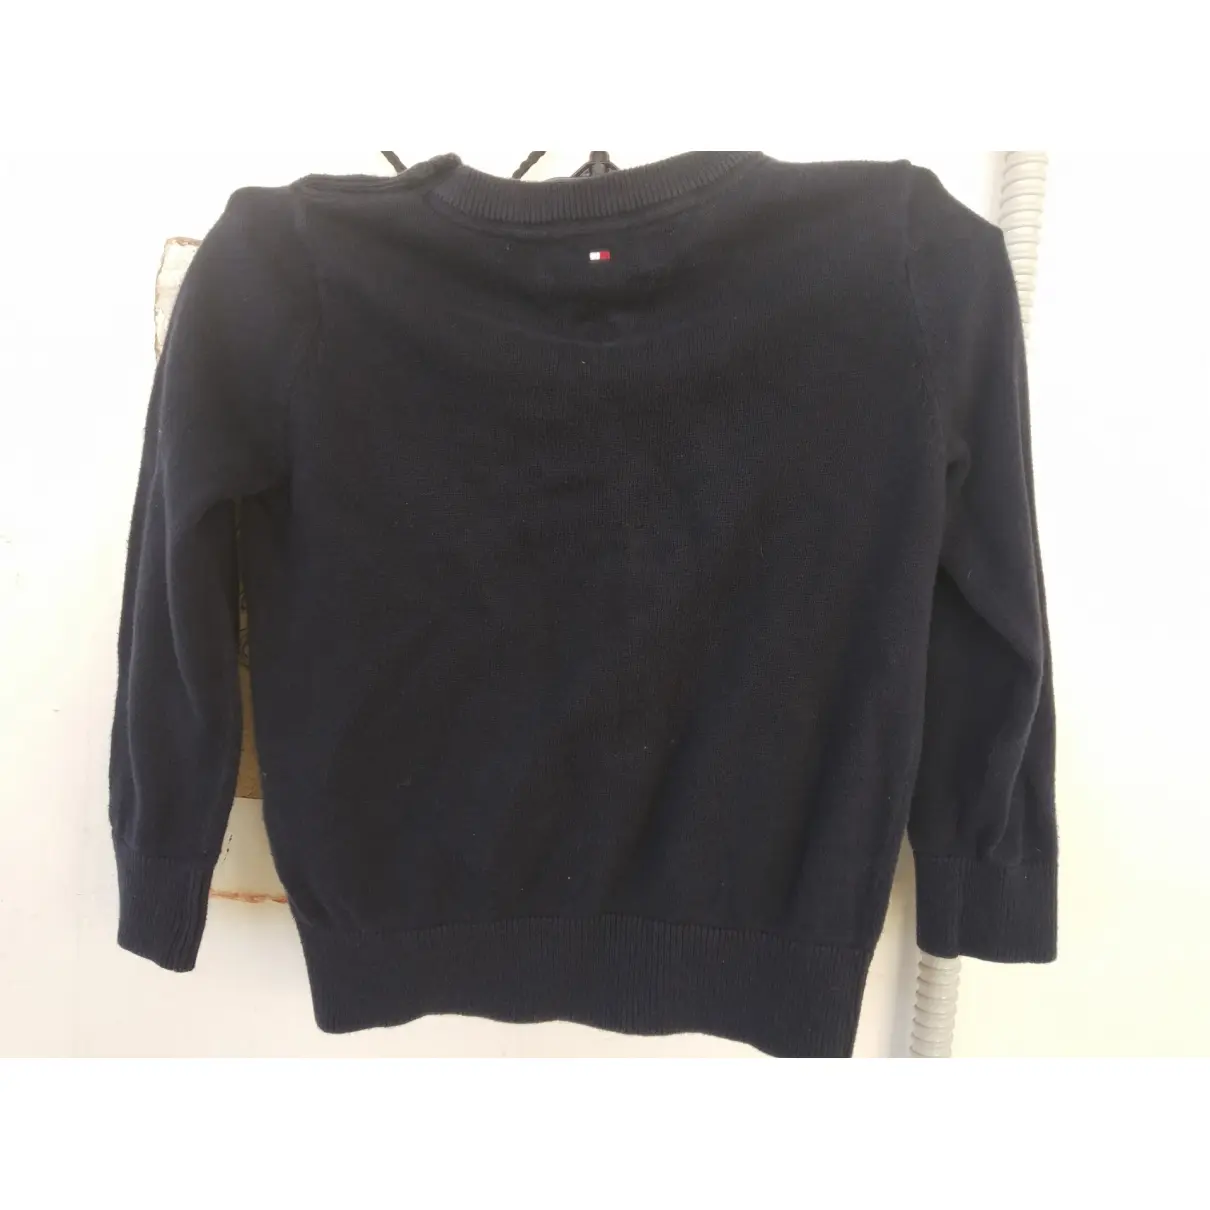 Buy Tommy Hilfiger Sweater online